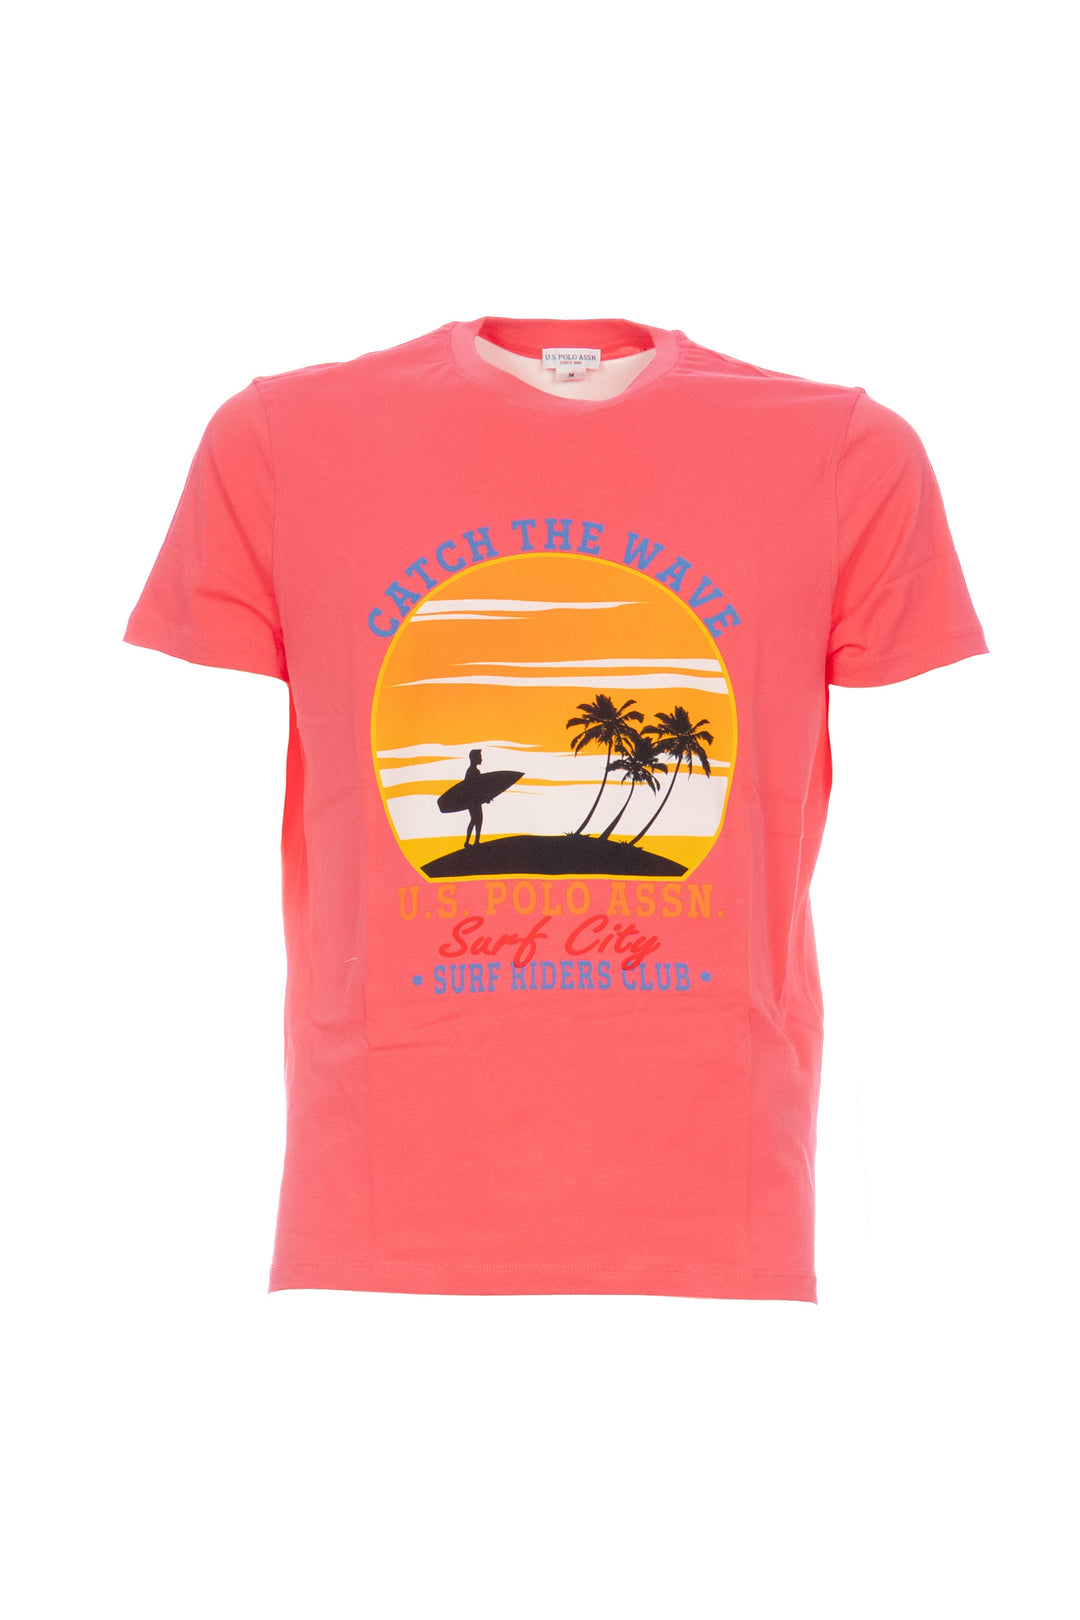 U.S. POLO ASSN. T-shirt corallo in cotone con stampa surf - Mancinelli 1954